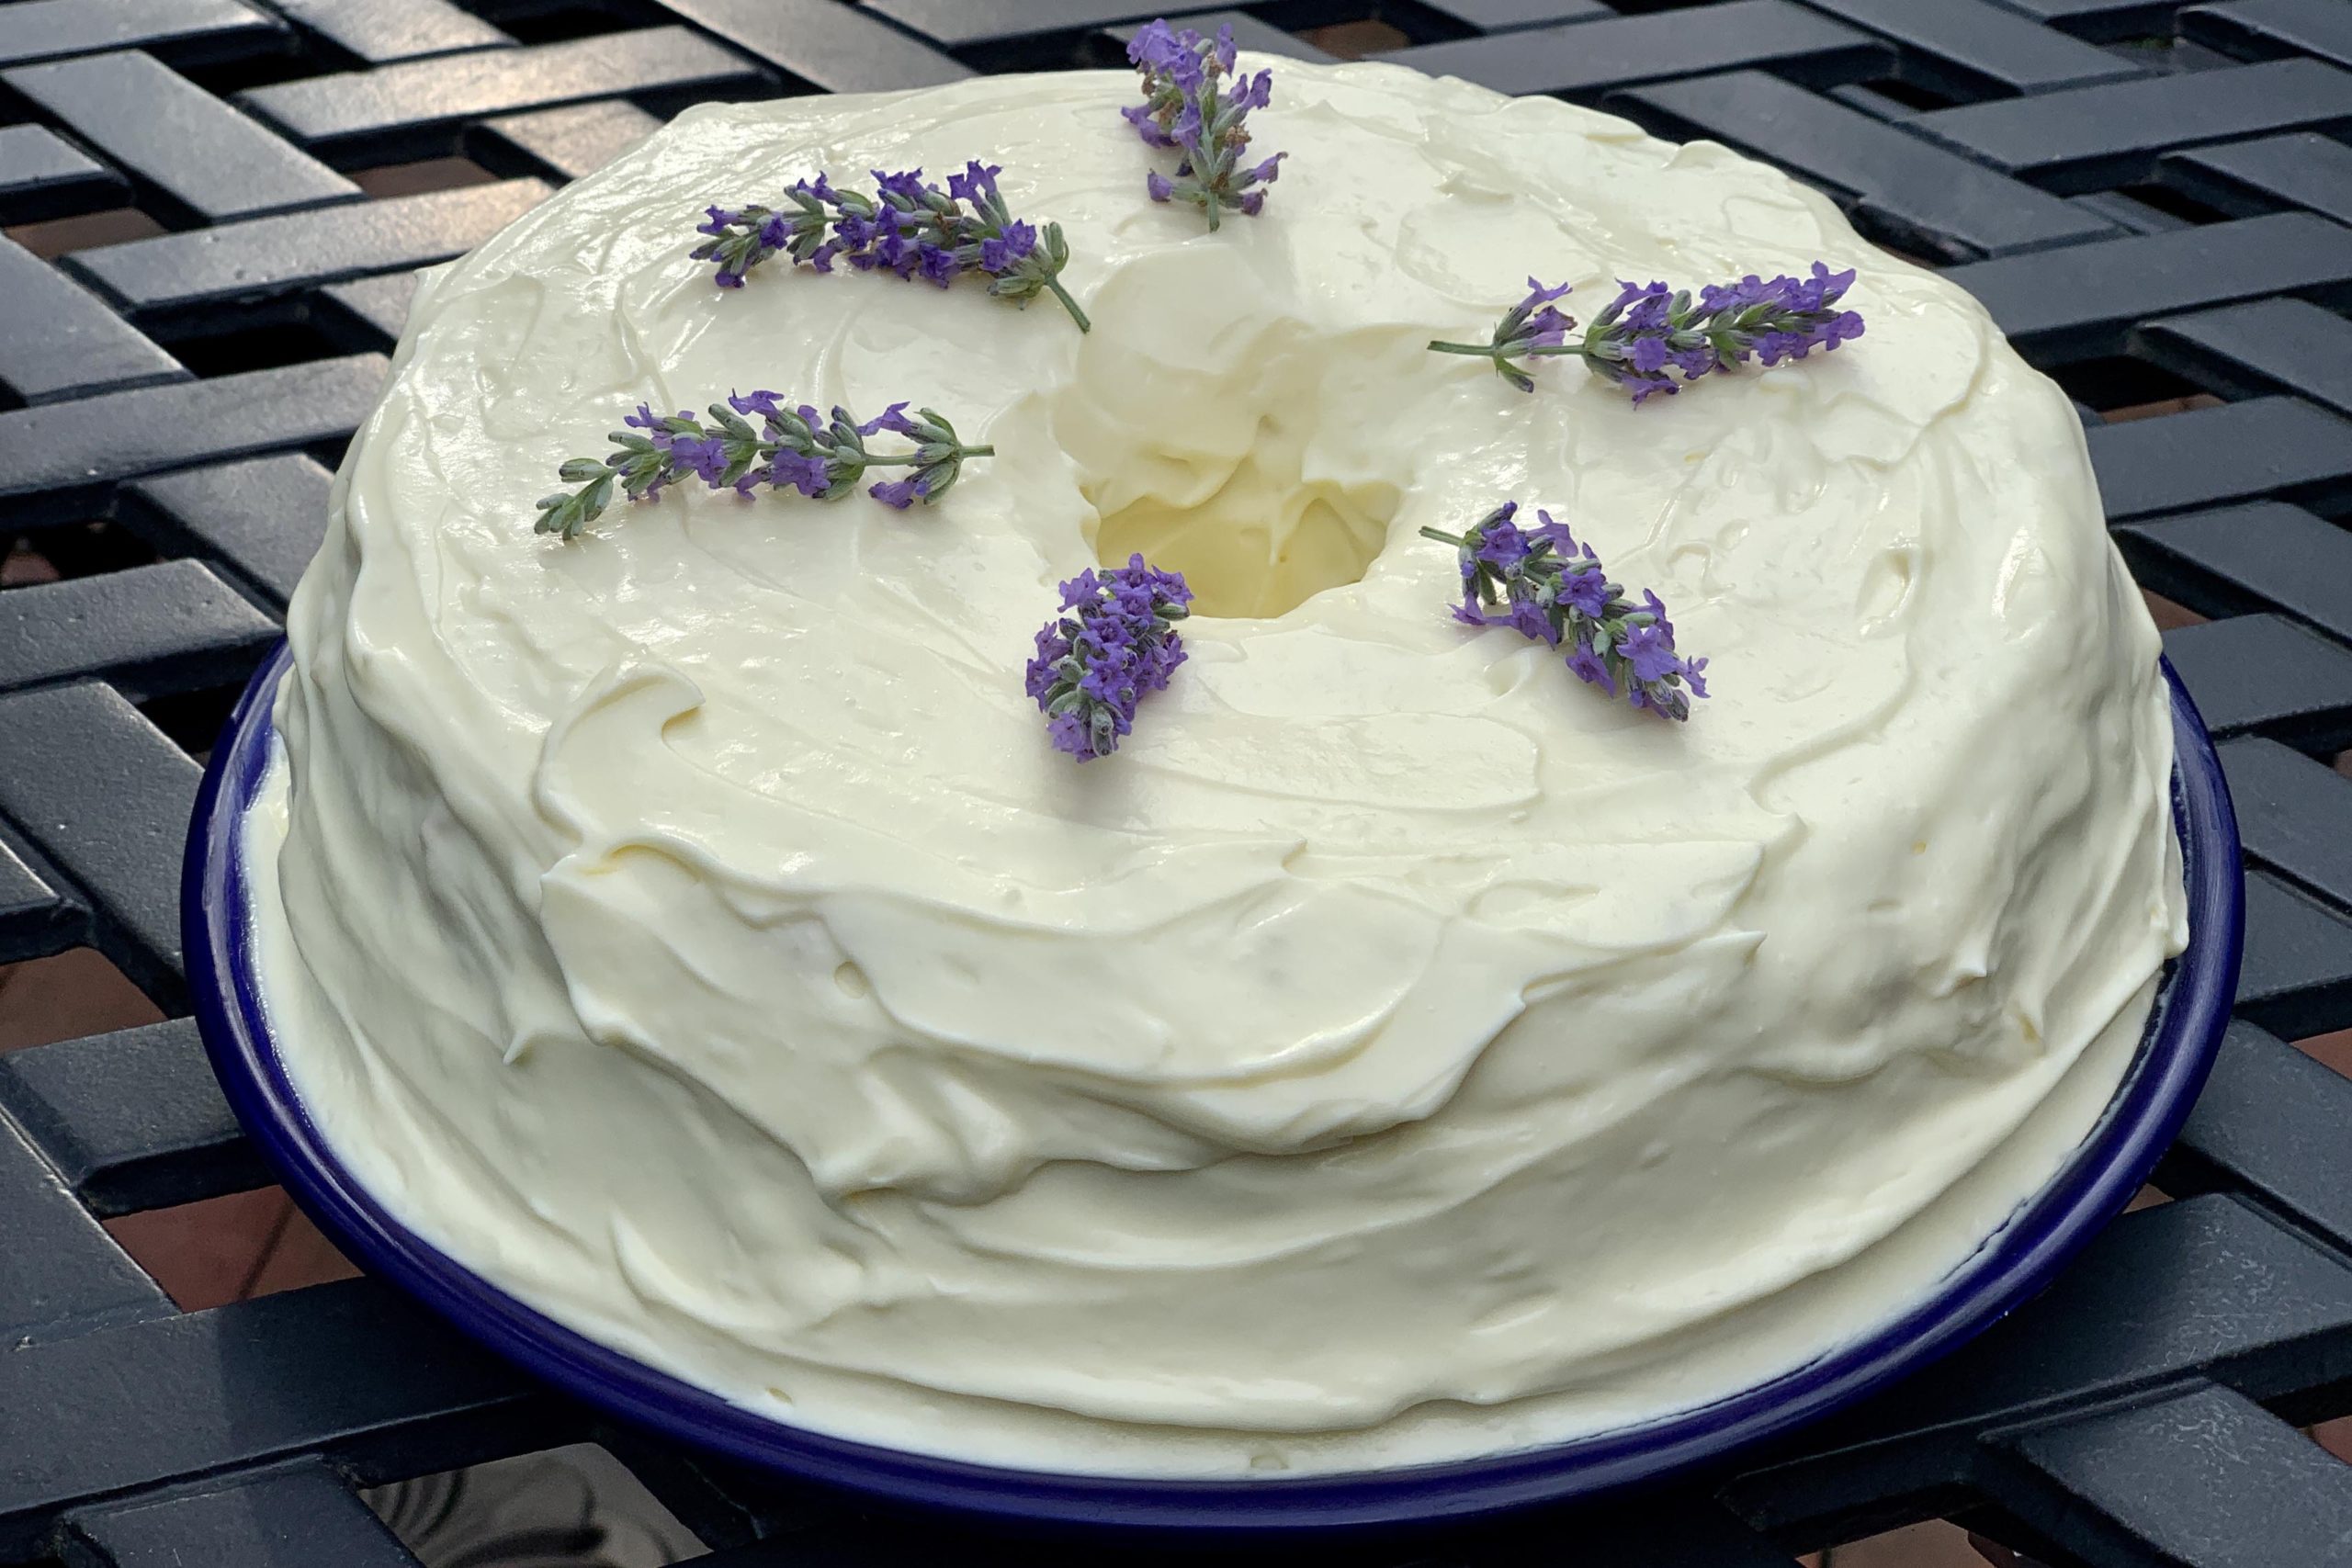 Lemon-Lavender Cake with Mascarpone Frosting